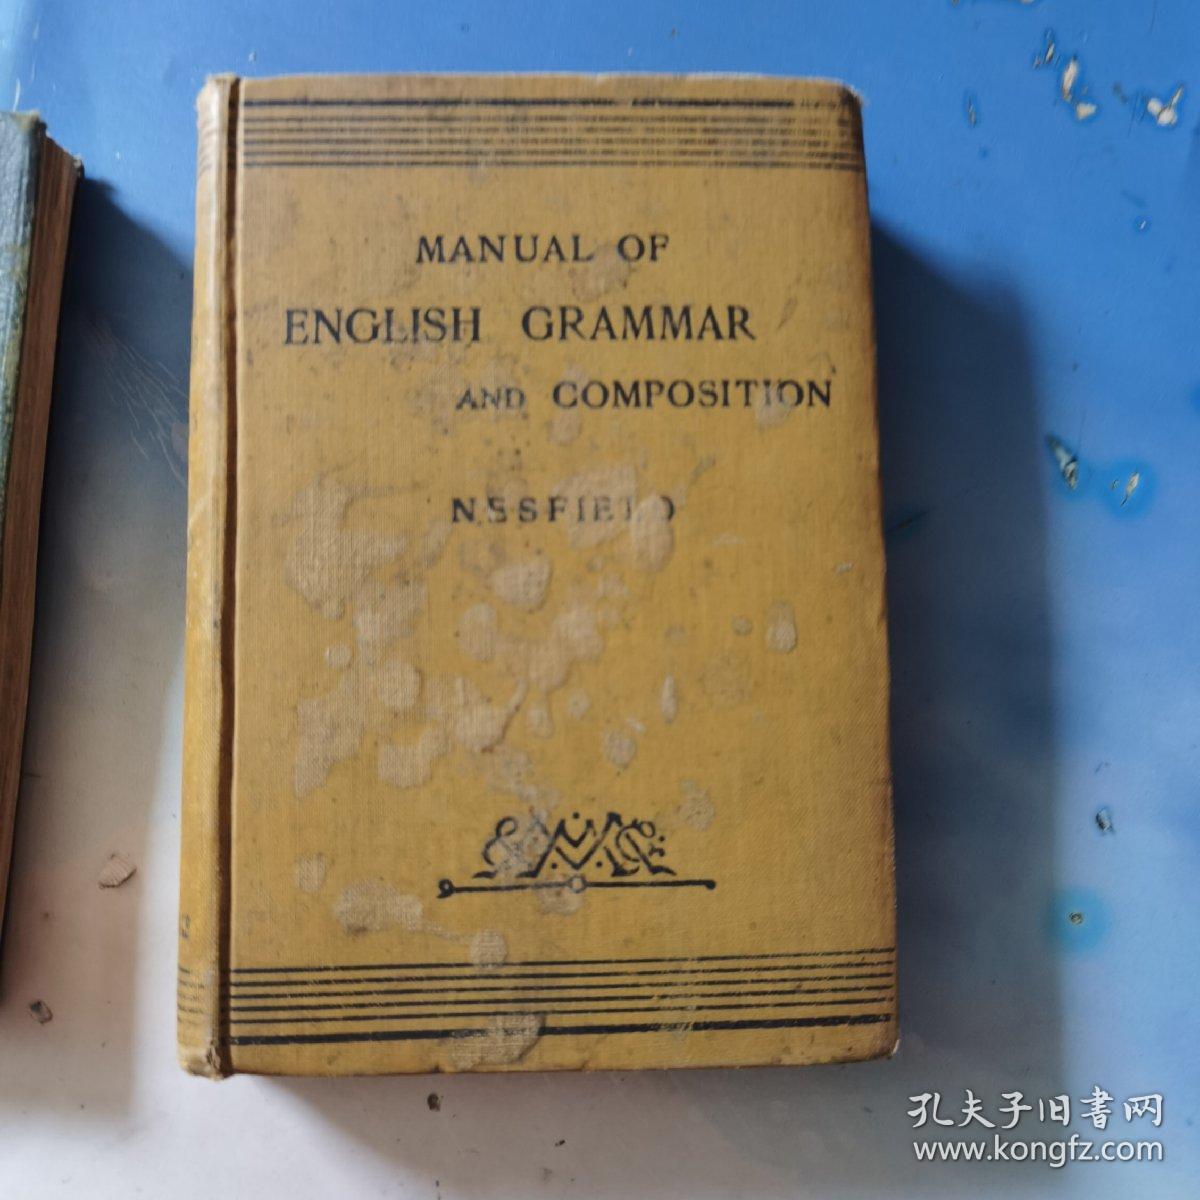 manual of english grammar and composition 手册的英语语法和写作 缺扉页